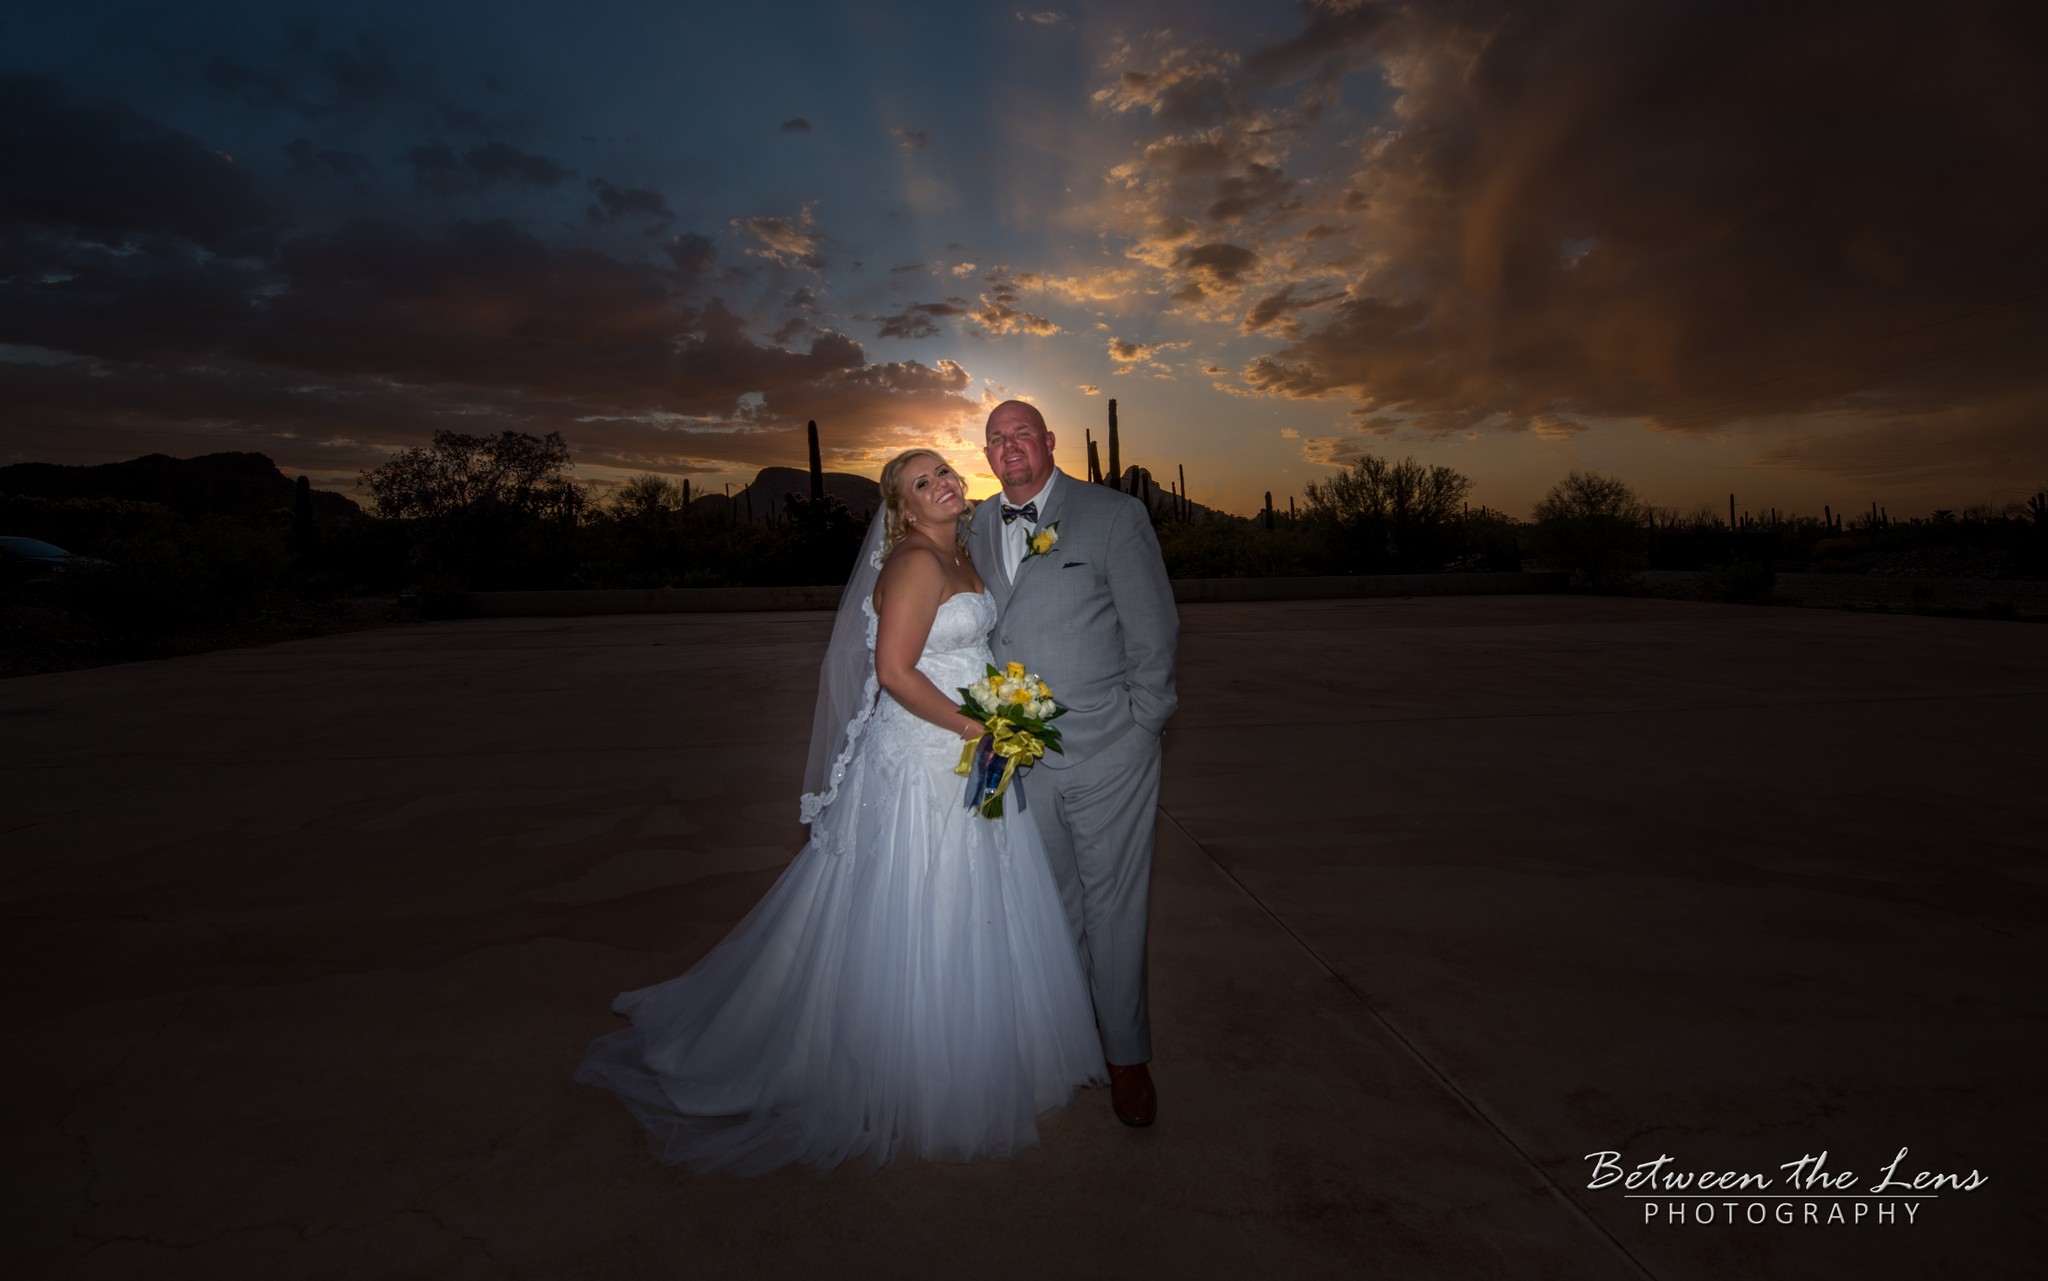 Couple During a Desert Sunset